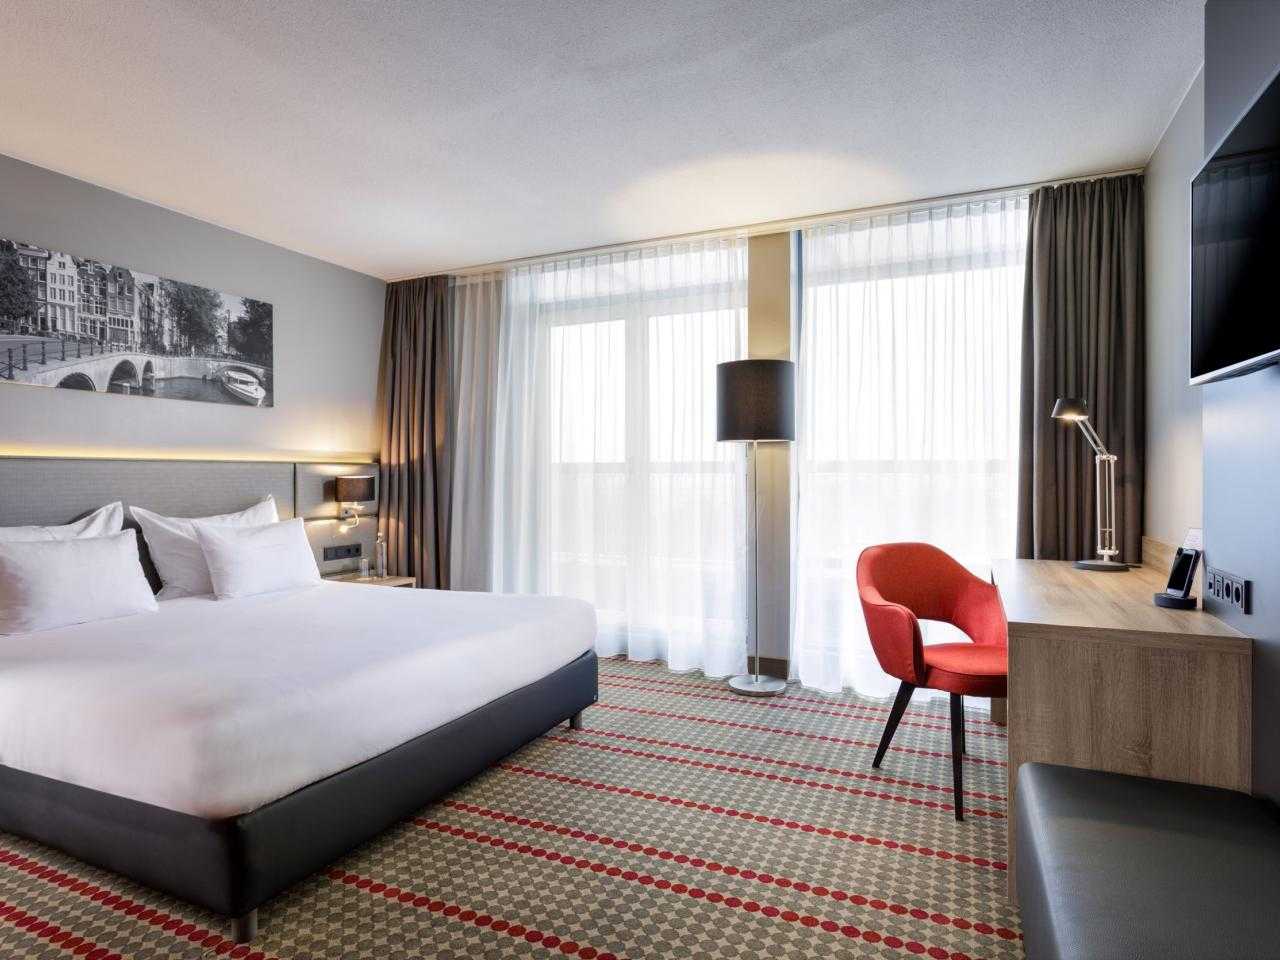 Interieur hotelkamer met met bureau en rode stoel Ramada hotel